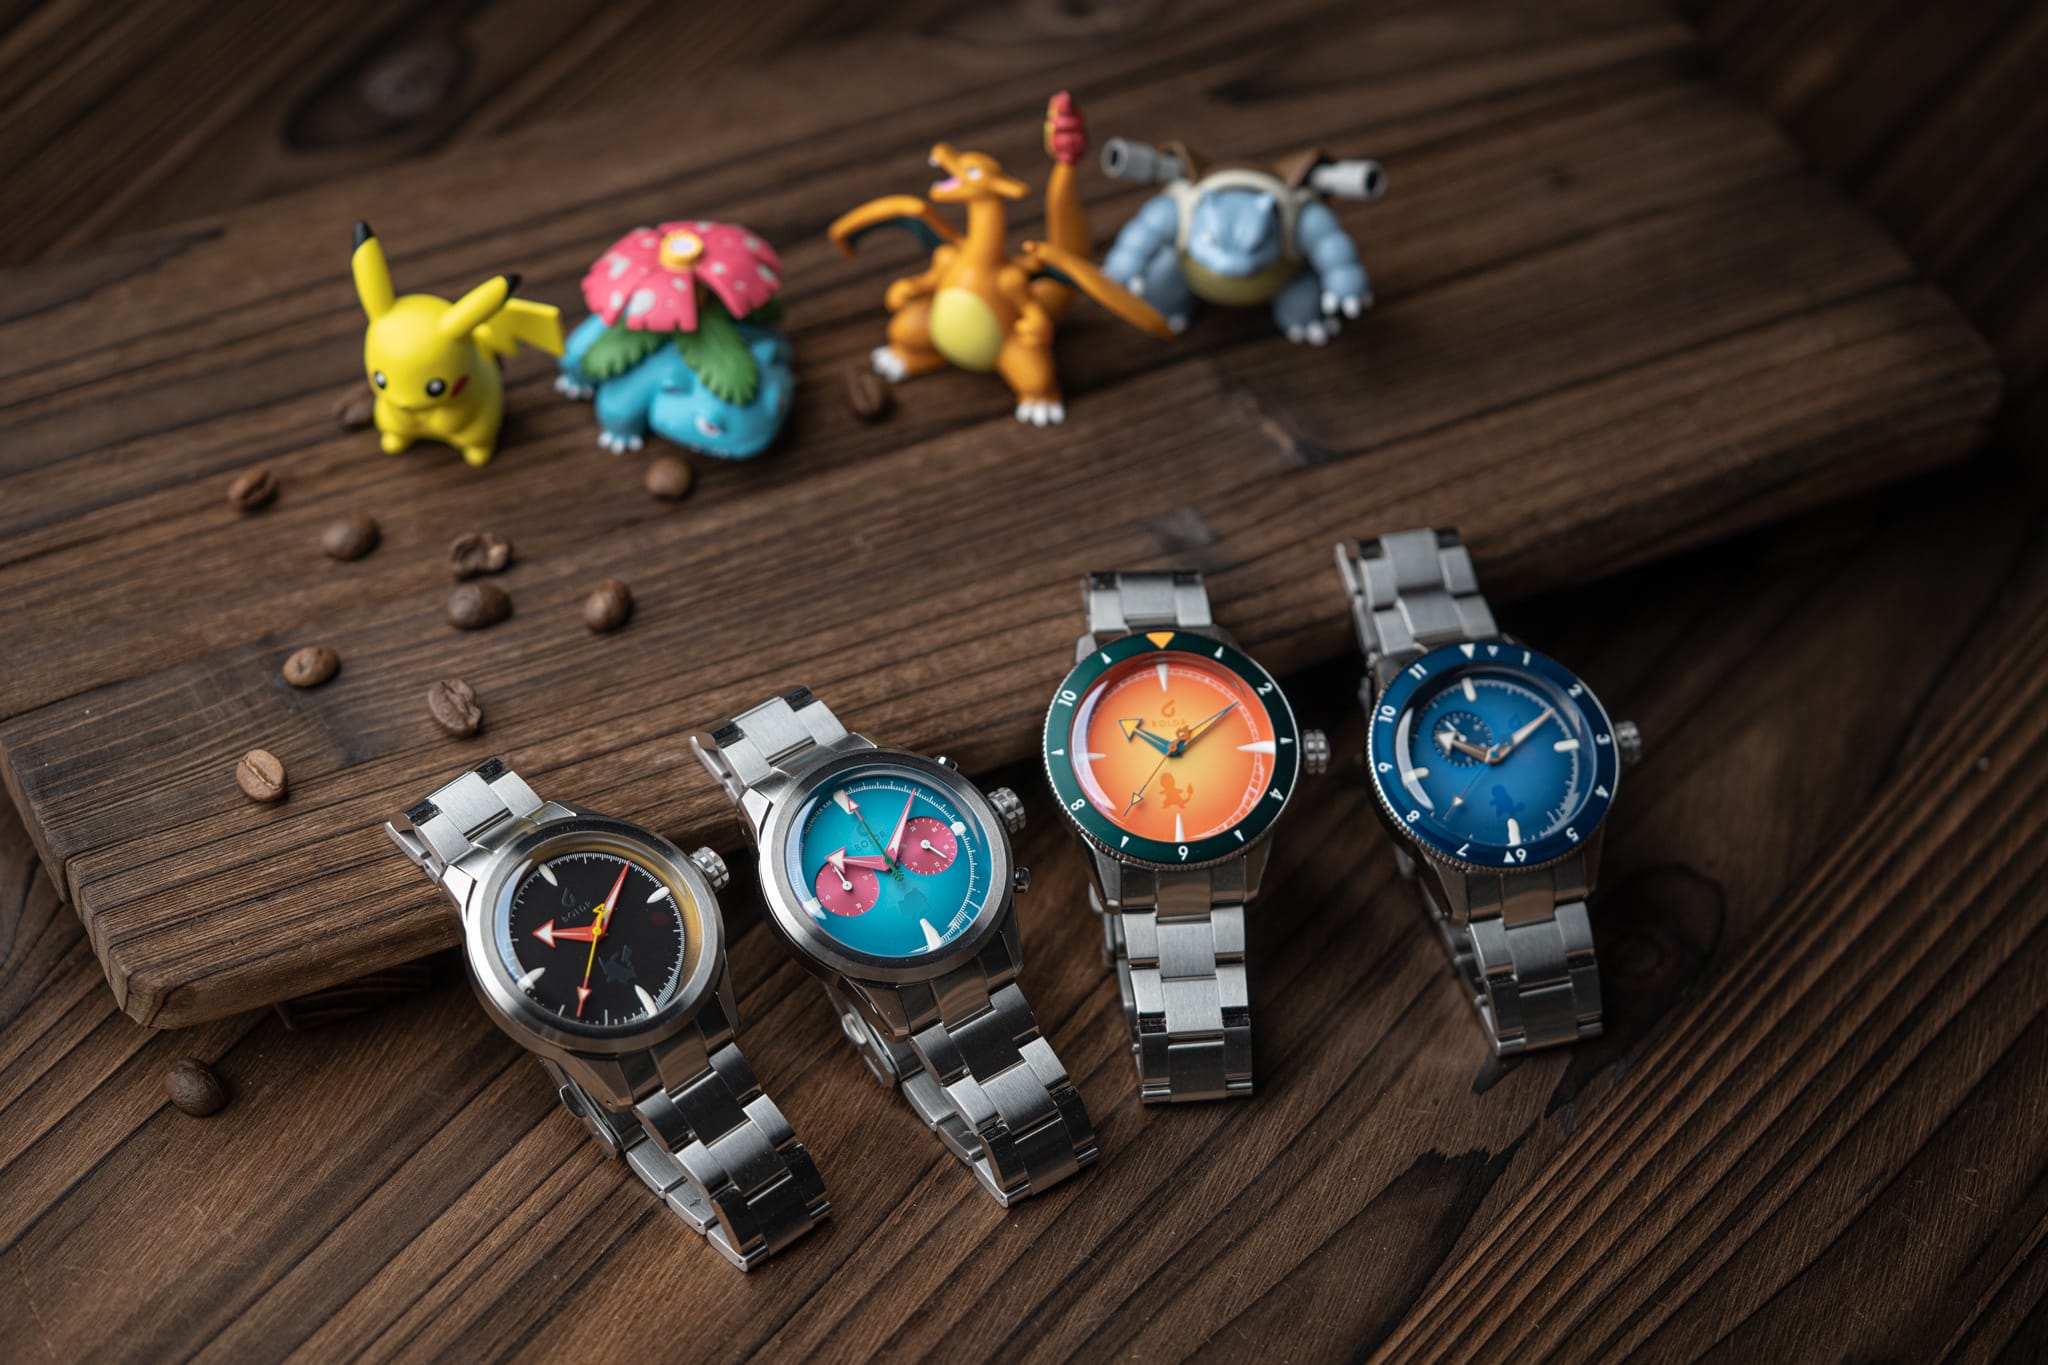 Singapore watch brand BOLDR launches limited-edition Pokémon timepieces